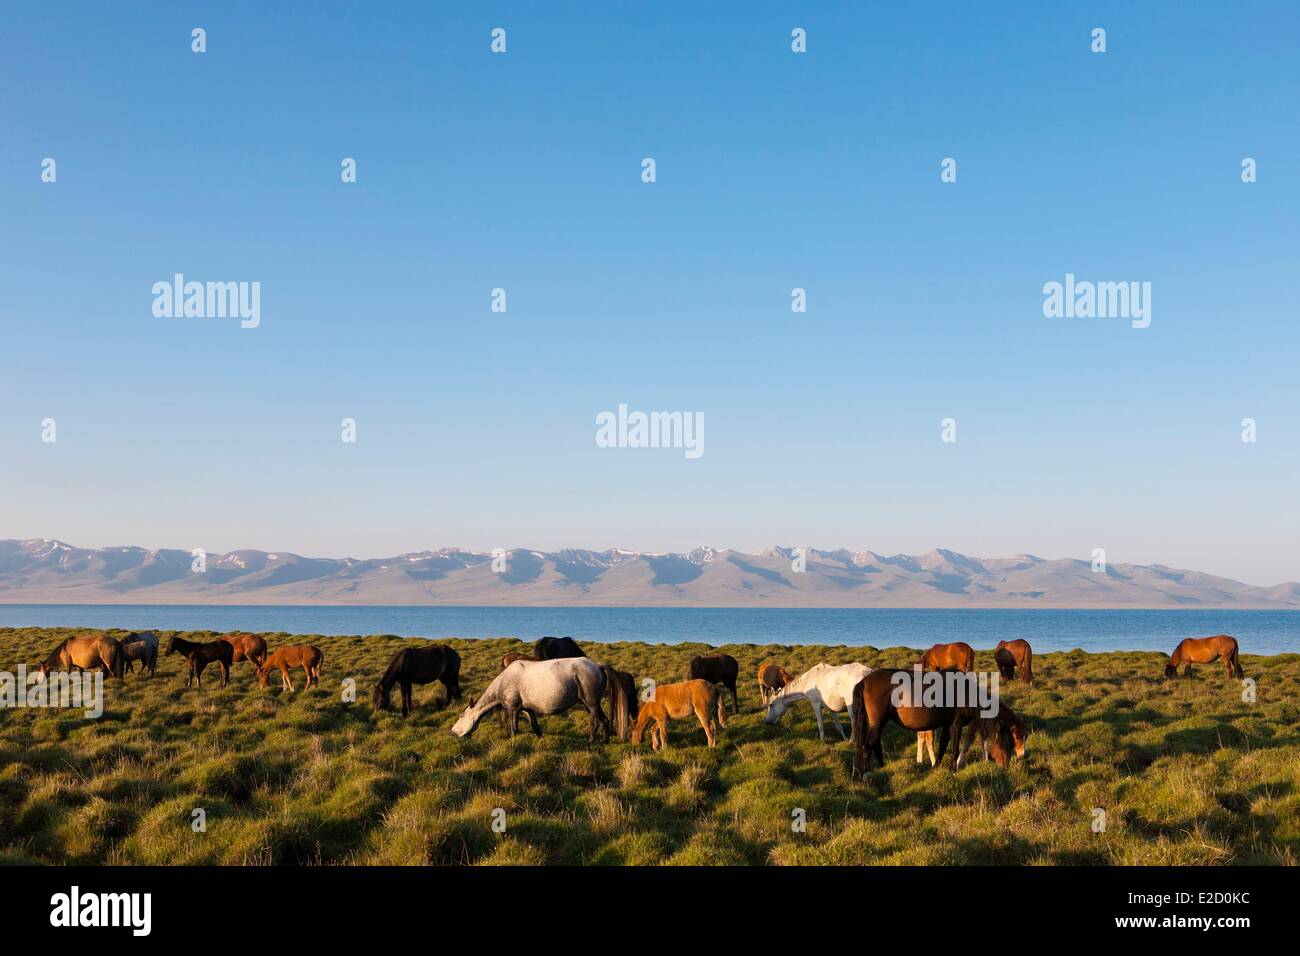 Kirgisistan Naryn Provinz Herde von Pferden auf Almen im Song-Kol See staatliche zoologische reserve Stockfoto